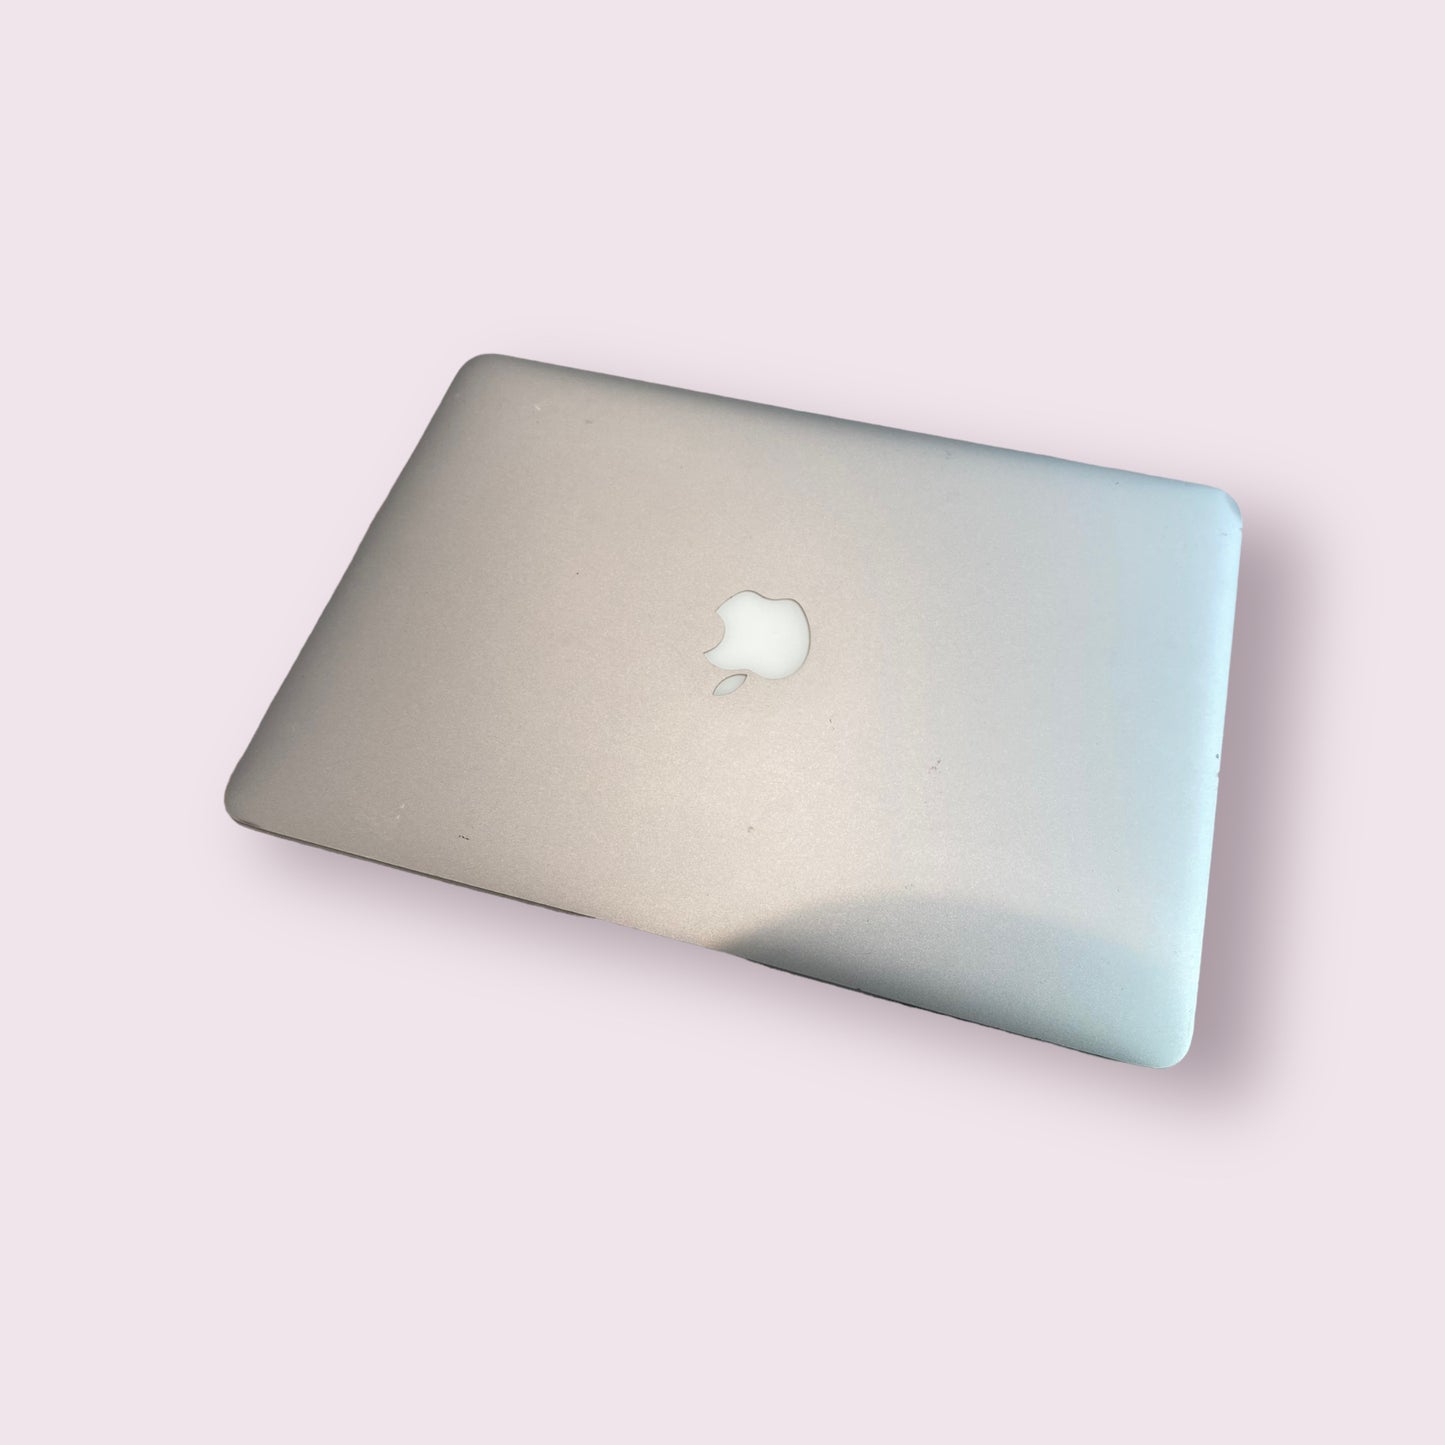 Apple Macbook air 13" A1466 2013 - 8gb RAM, i5, 128gb SSD, big sur